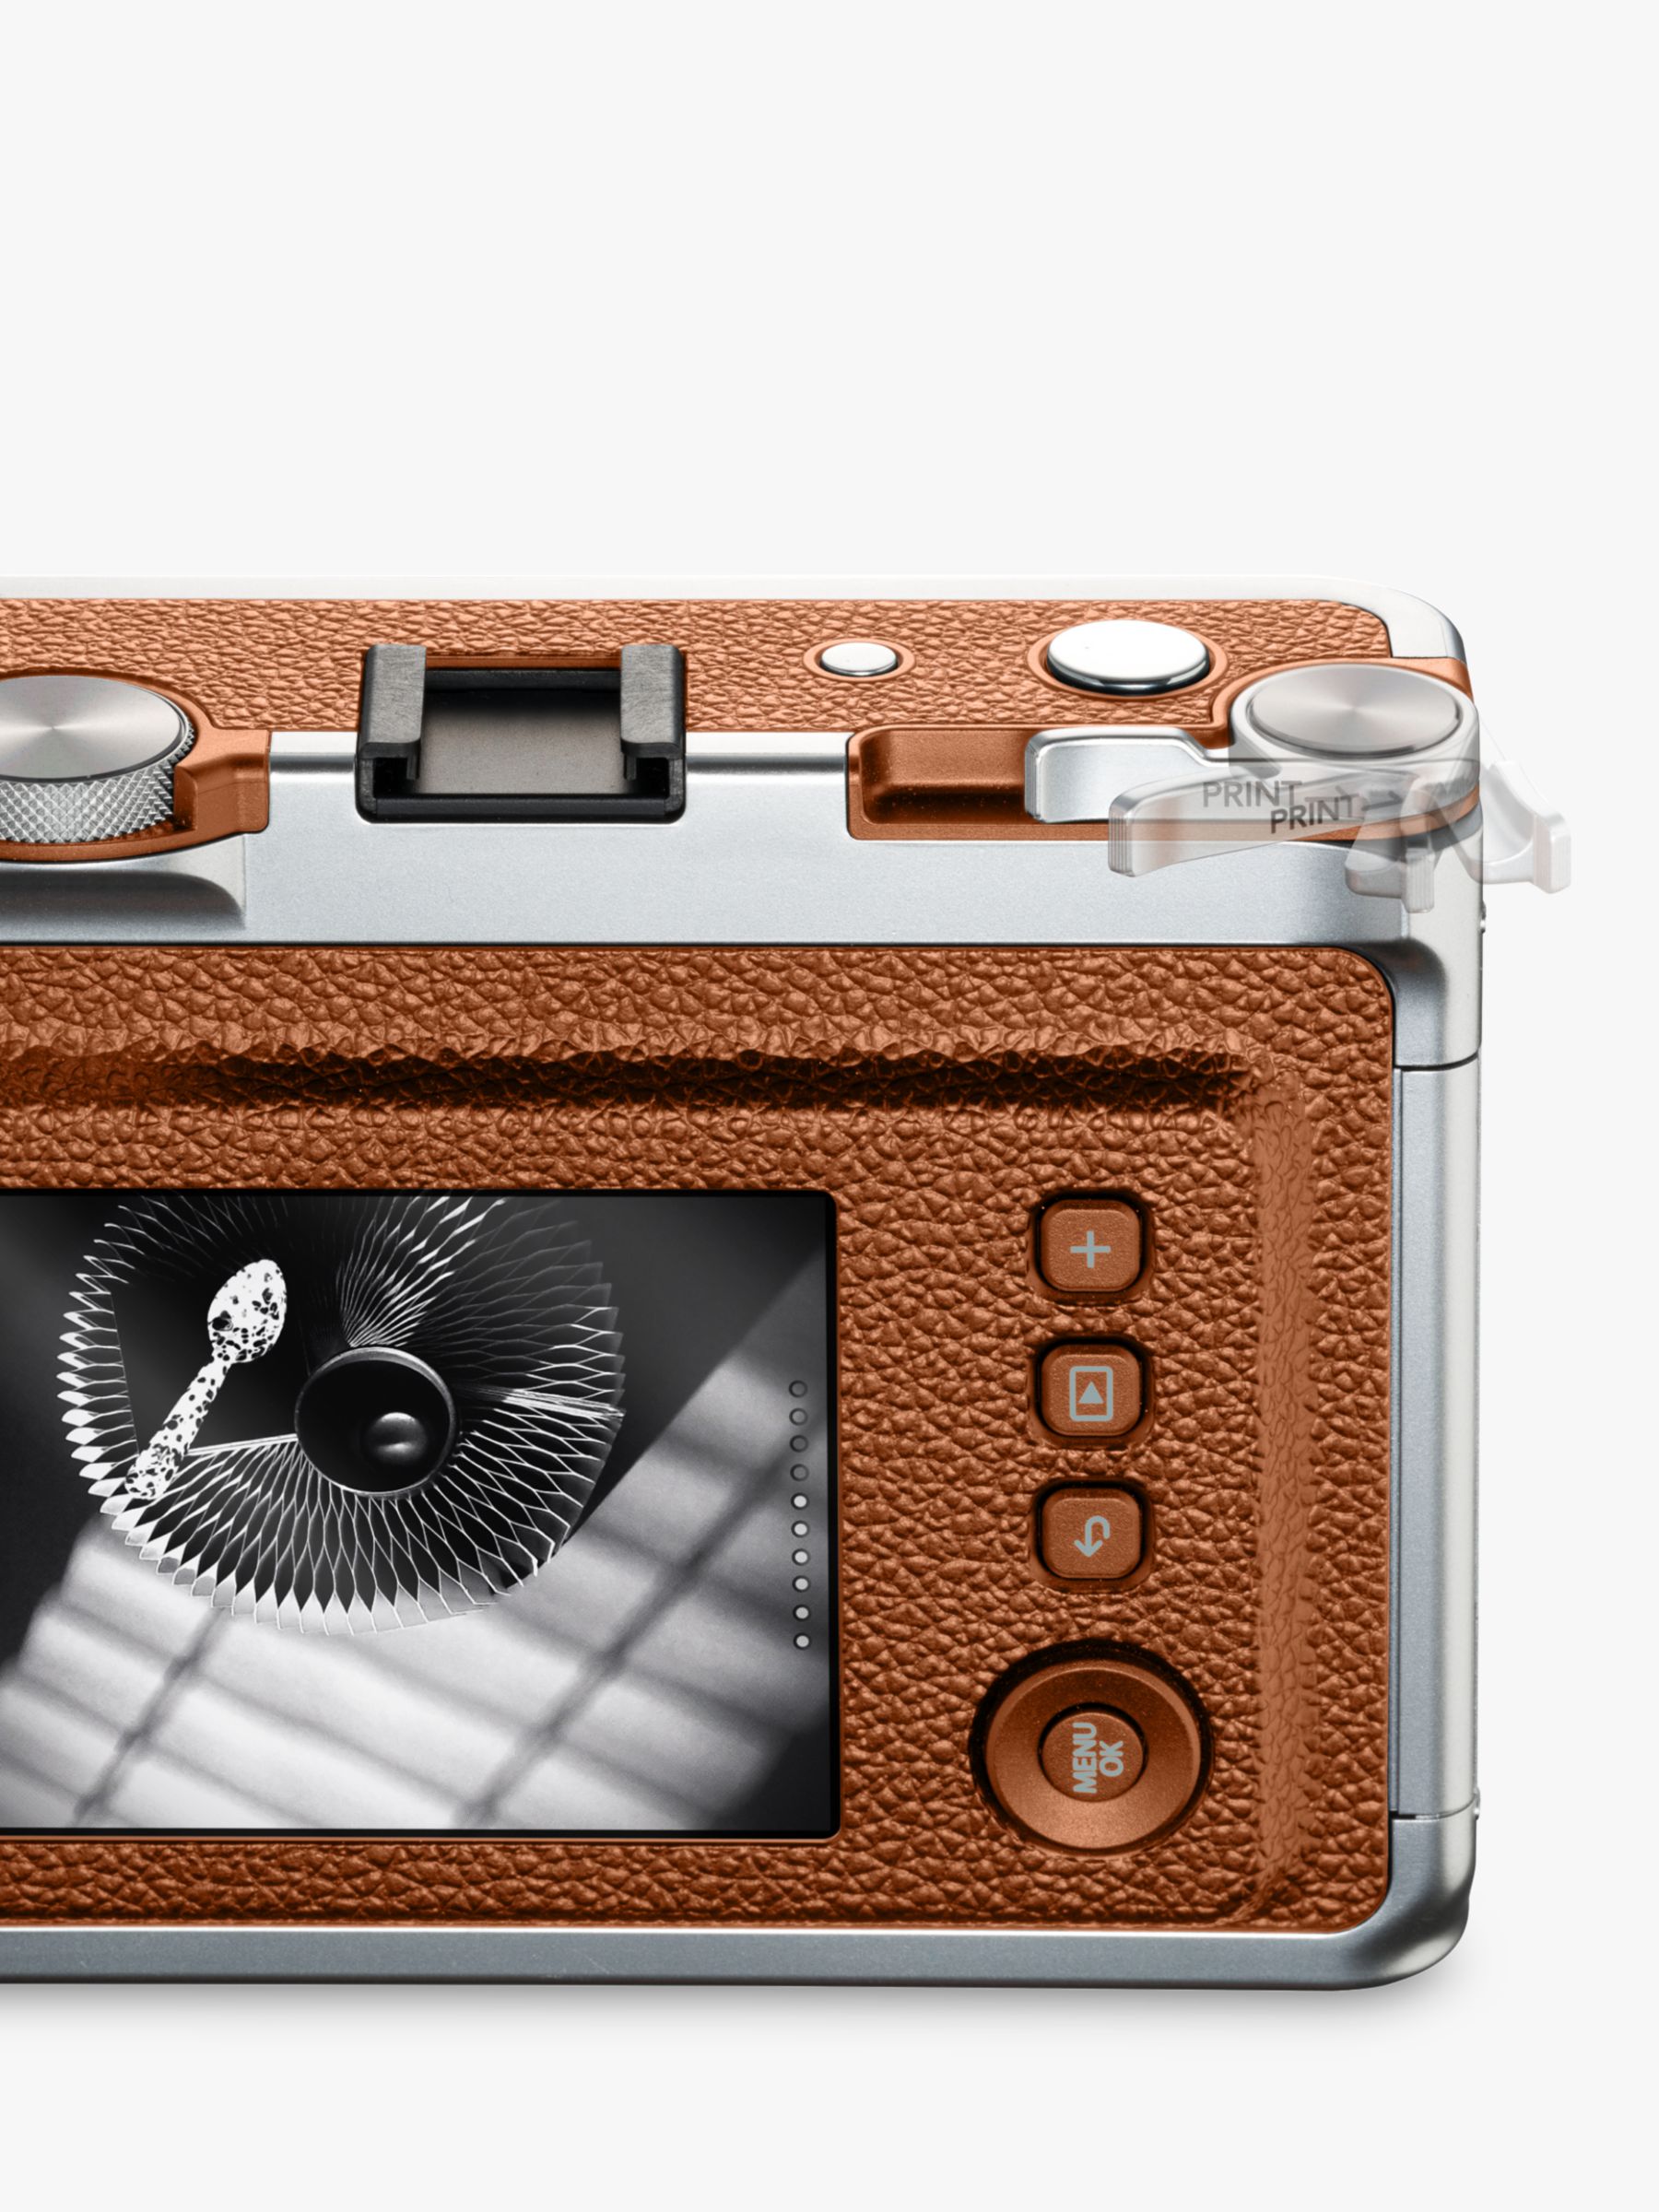 Fujifilm Instax Mini Evo Hybrid Instant Camera